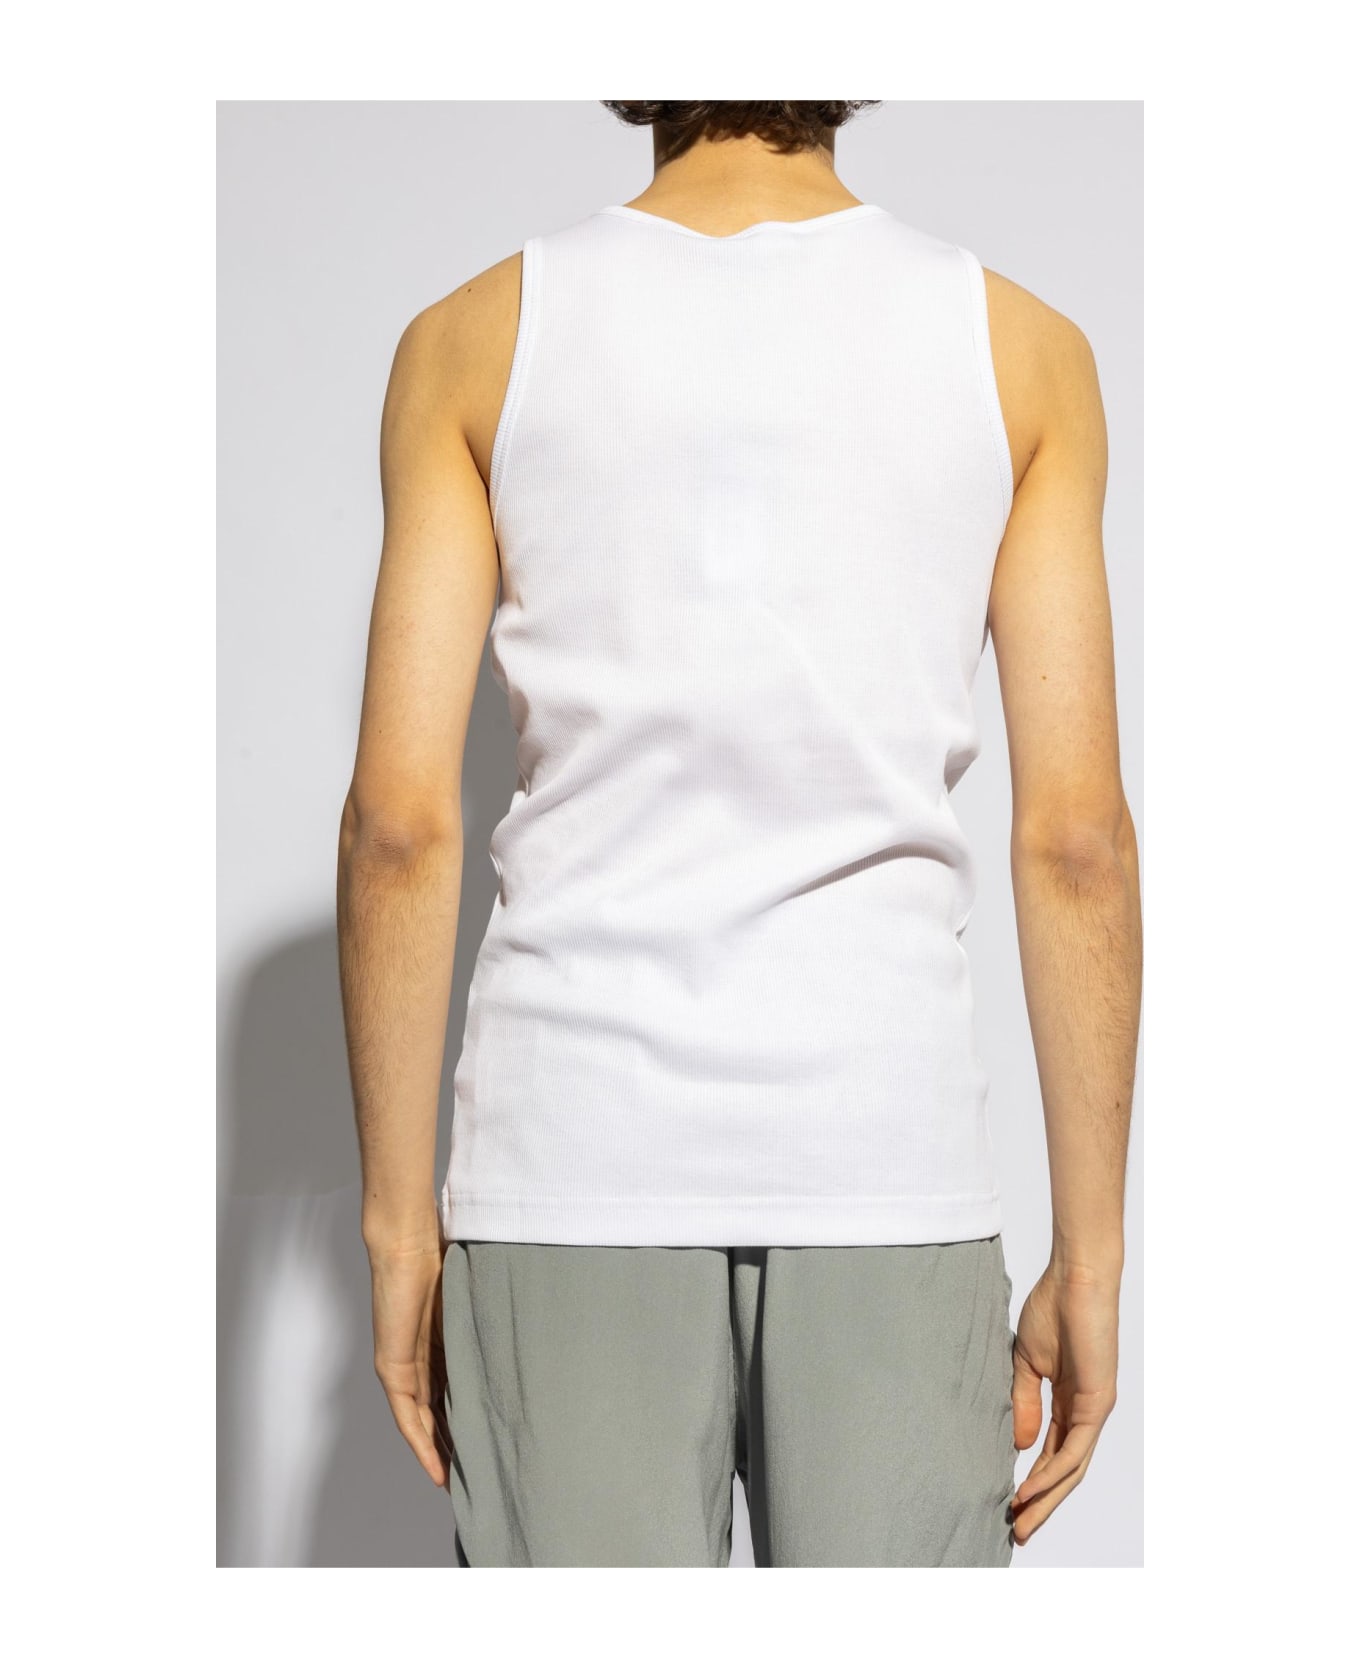 Dolce & Gabbana T-shirt - Optical white タンクトップ